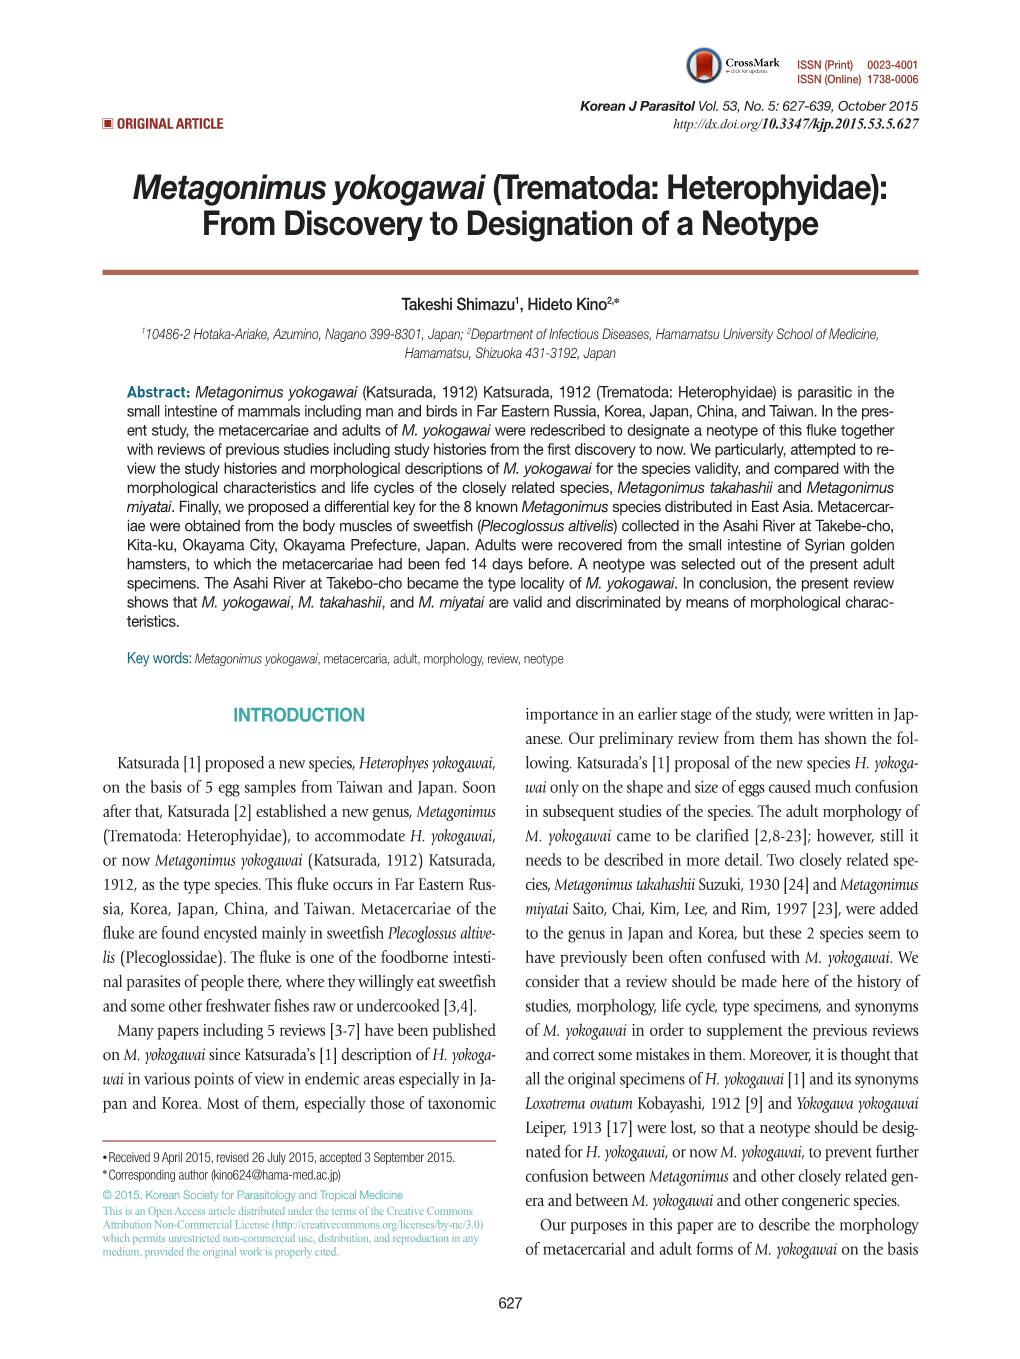 Metagonimus Yokogawai (Trematoda: Heterophyidae): from Discovery to Designation of a Neotype